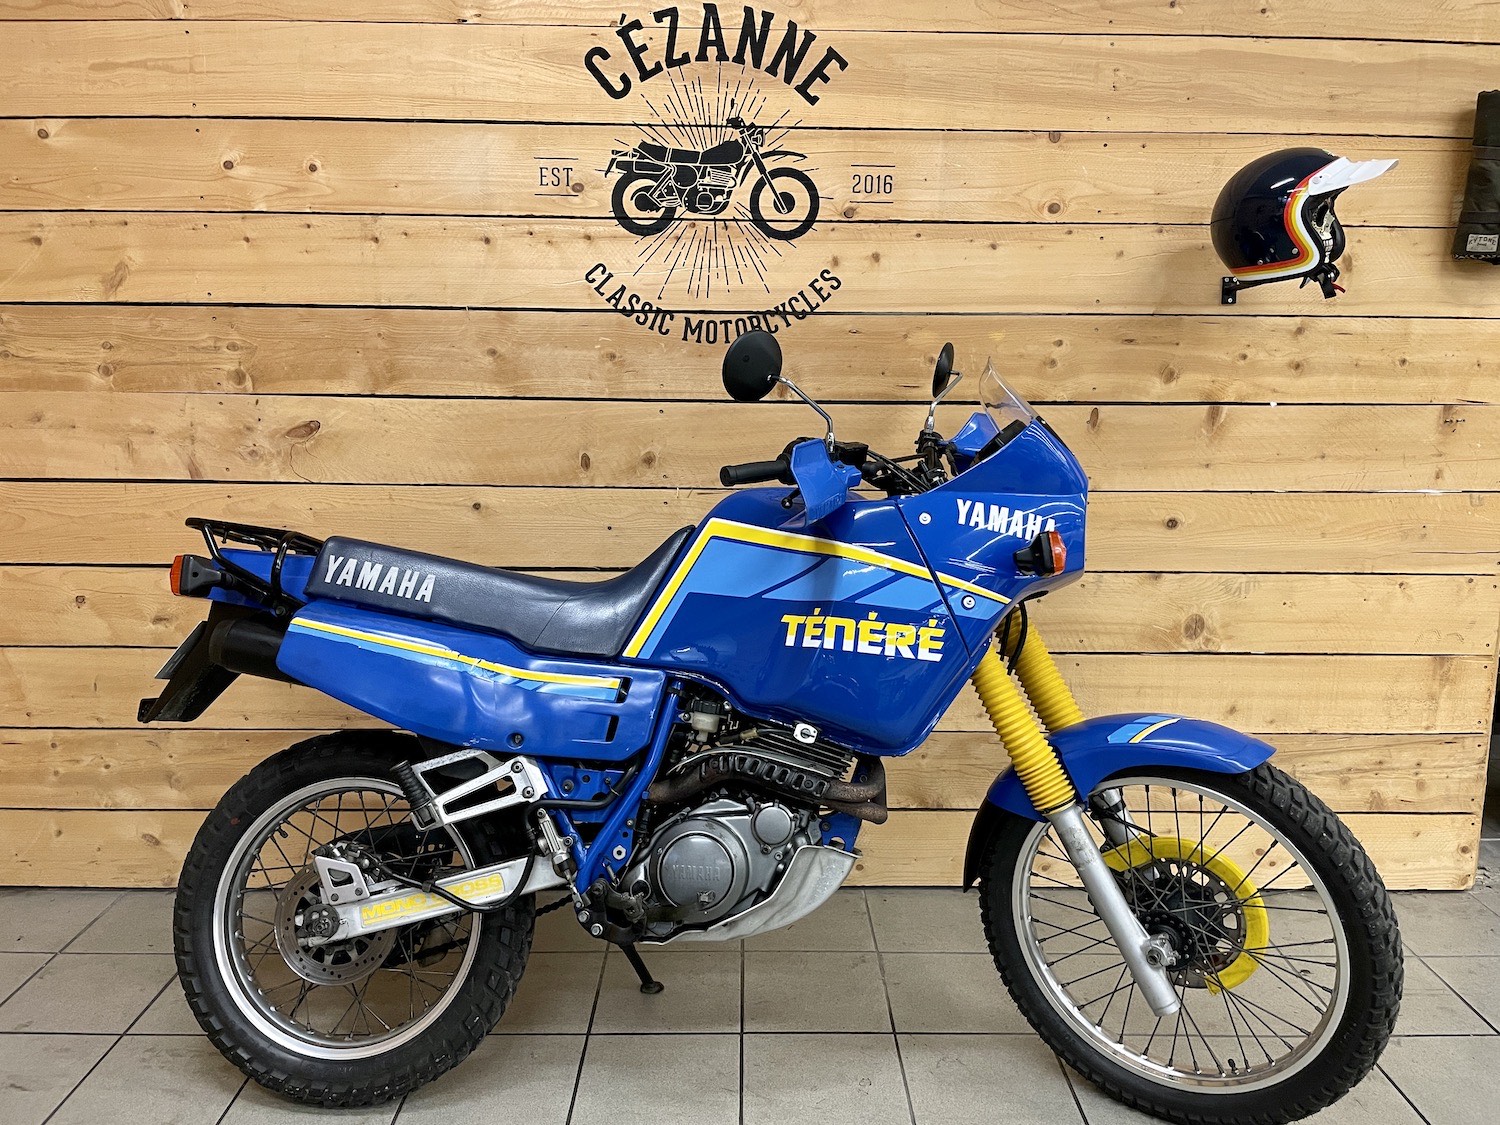 Yamaha_XT600Z_Tenere_cezanne_classic_motorcycle_11-114.jpg